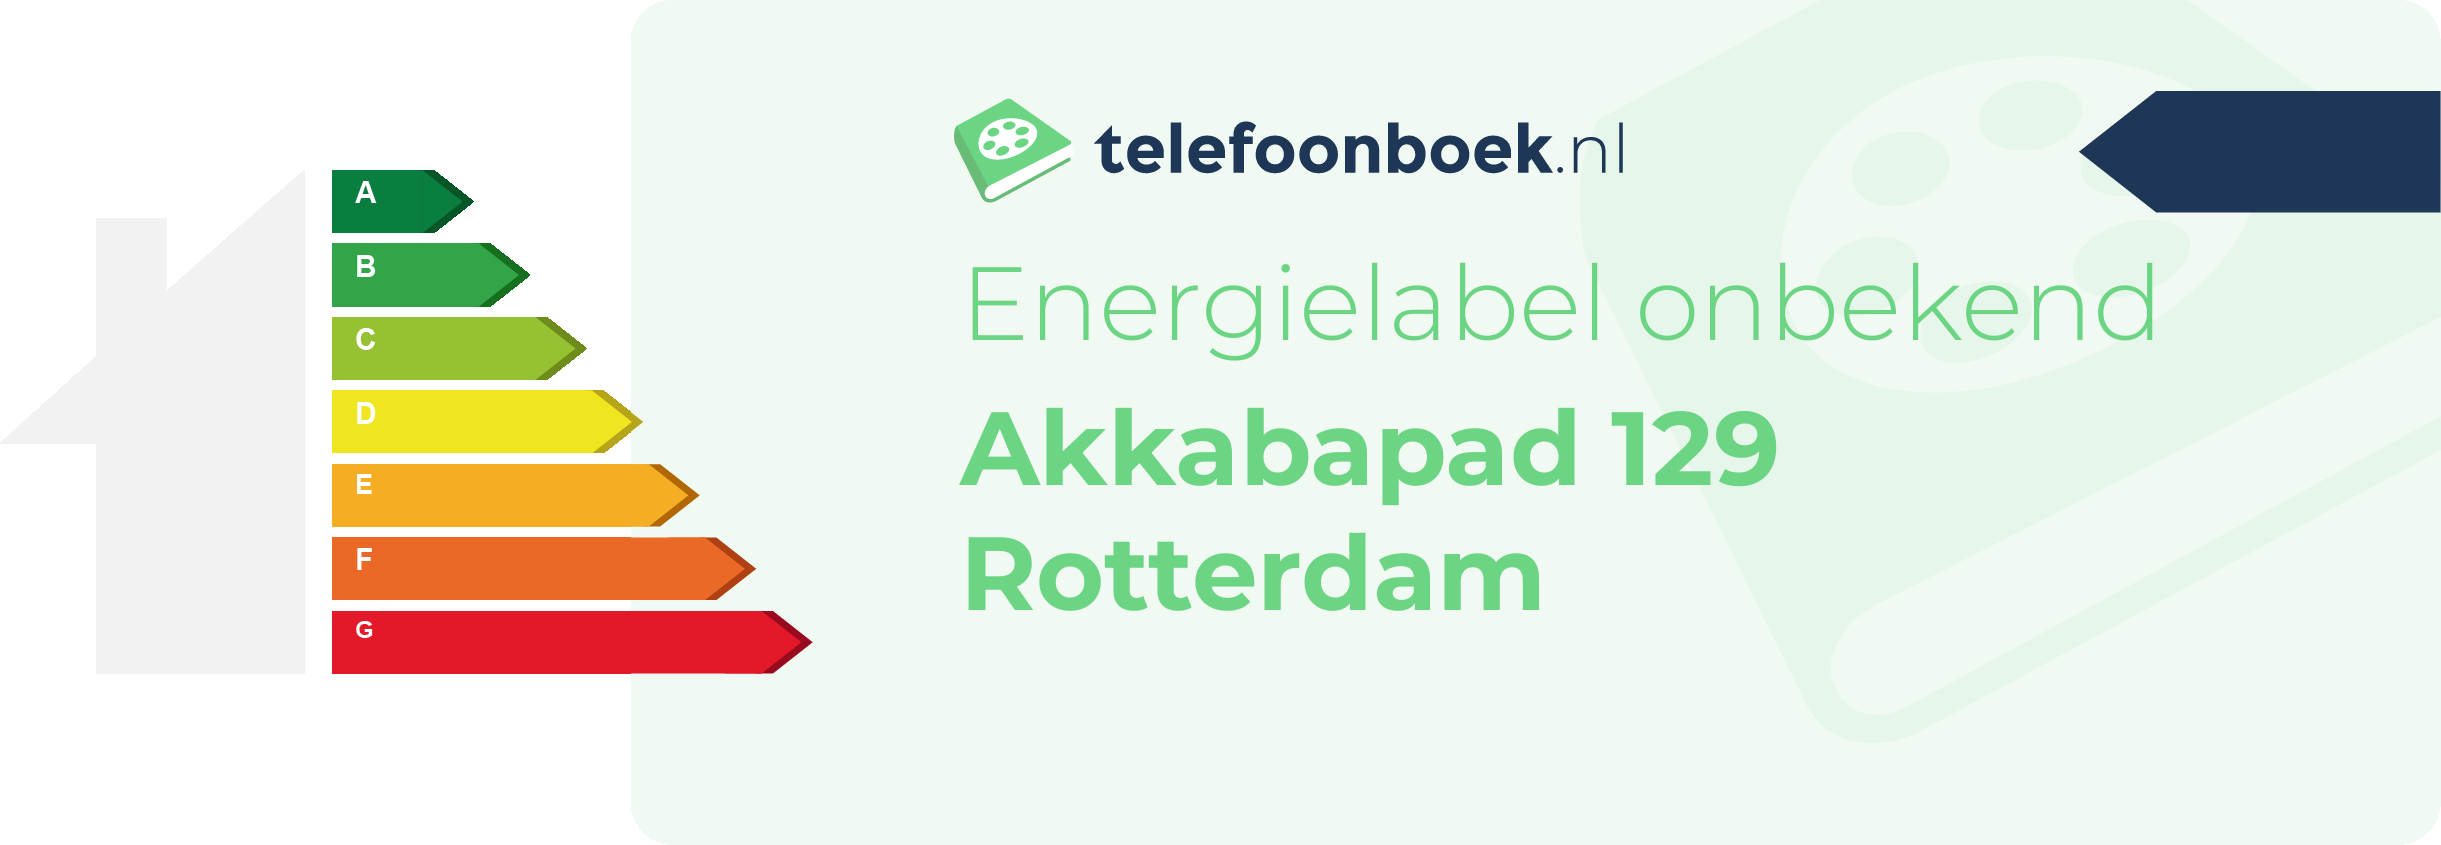 Energielabel Akkabapad 129 Rotterdam